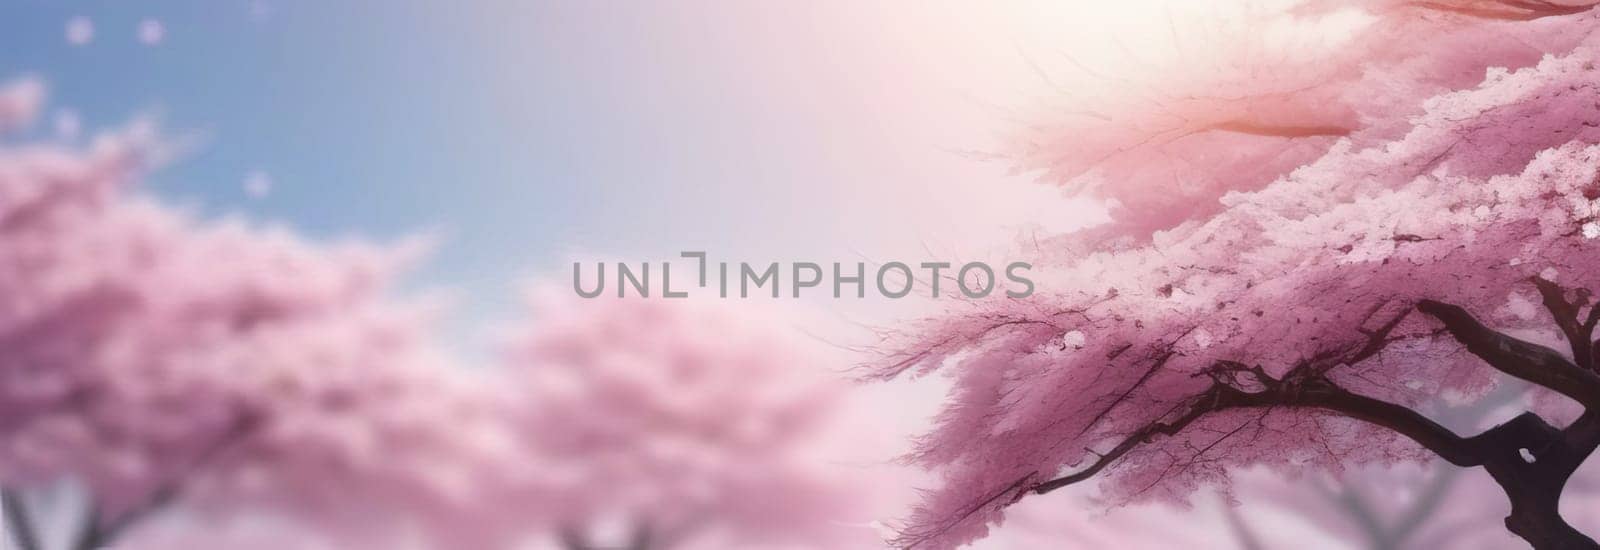 Cherry blossom flower blooming. Pink sakura flower background. Pink cherry blossom, isolated Sakura tree branch. For card, banner, invitation, social media post, poster, mobile apps, advertising. by Angelsmoon